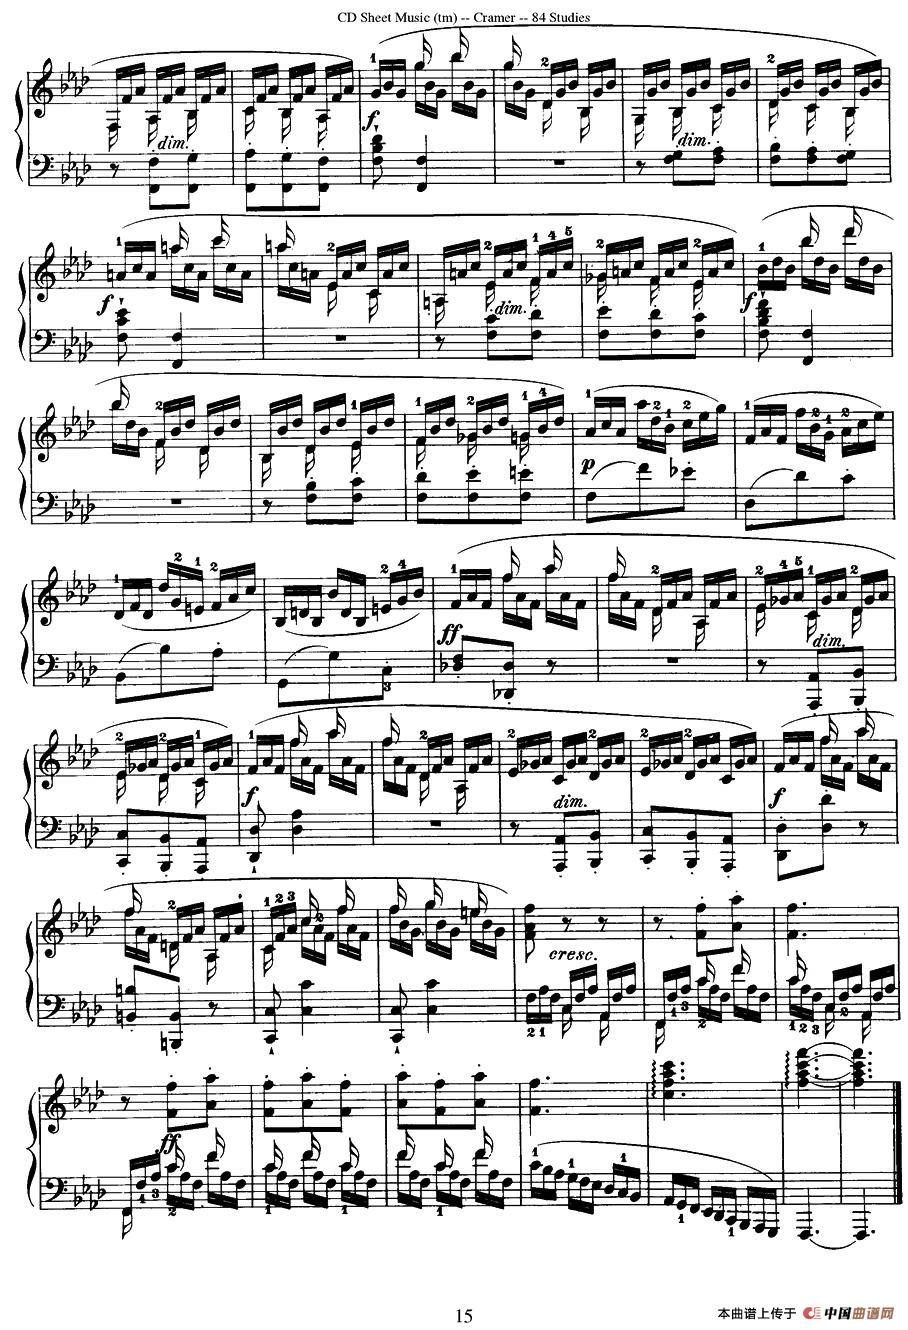 Cramer - 84 exercices（66—70）（克拉莫84首钢琴练习